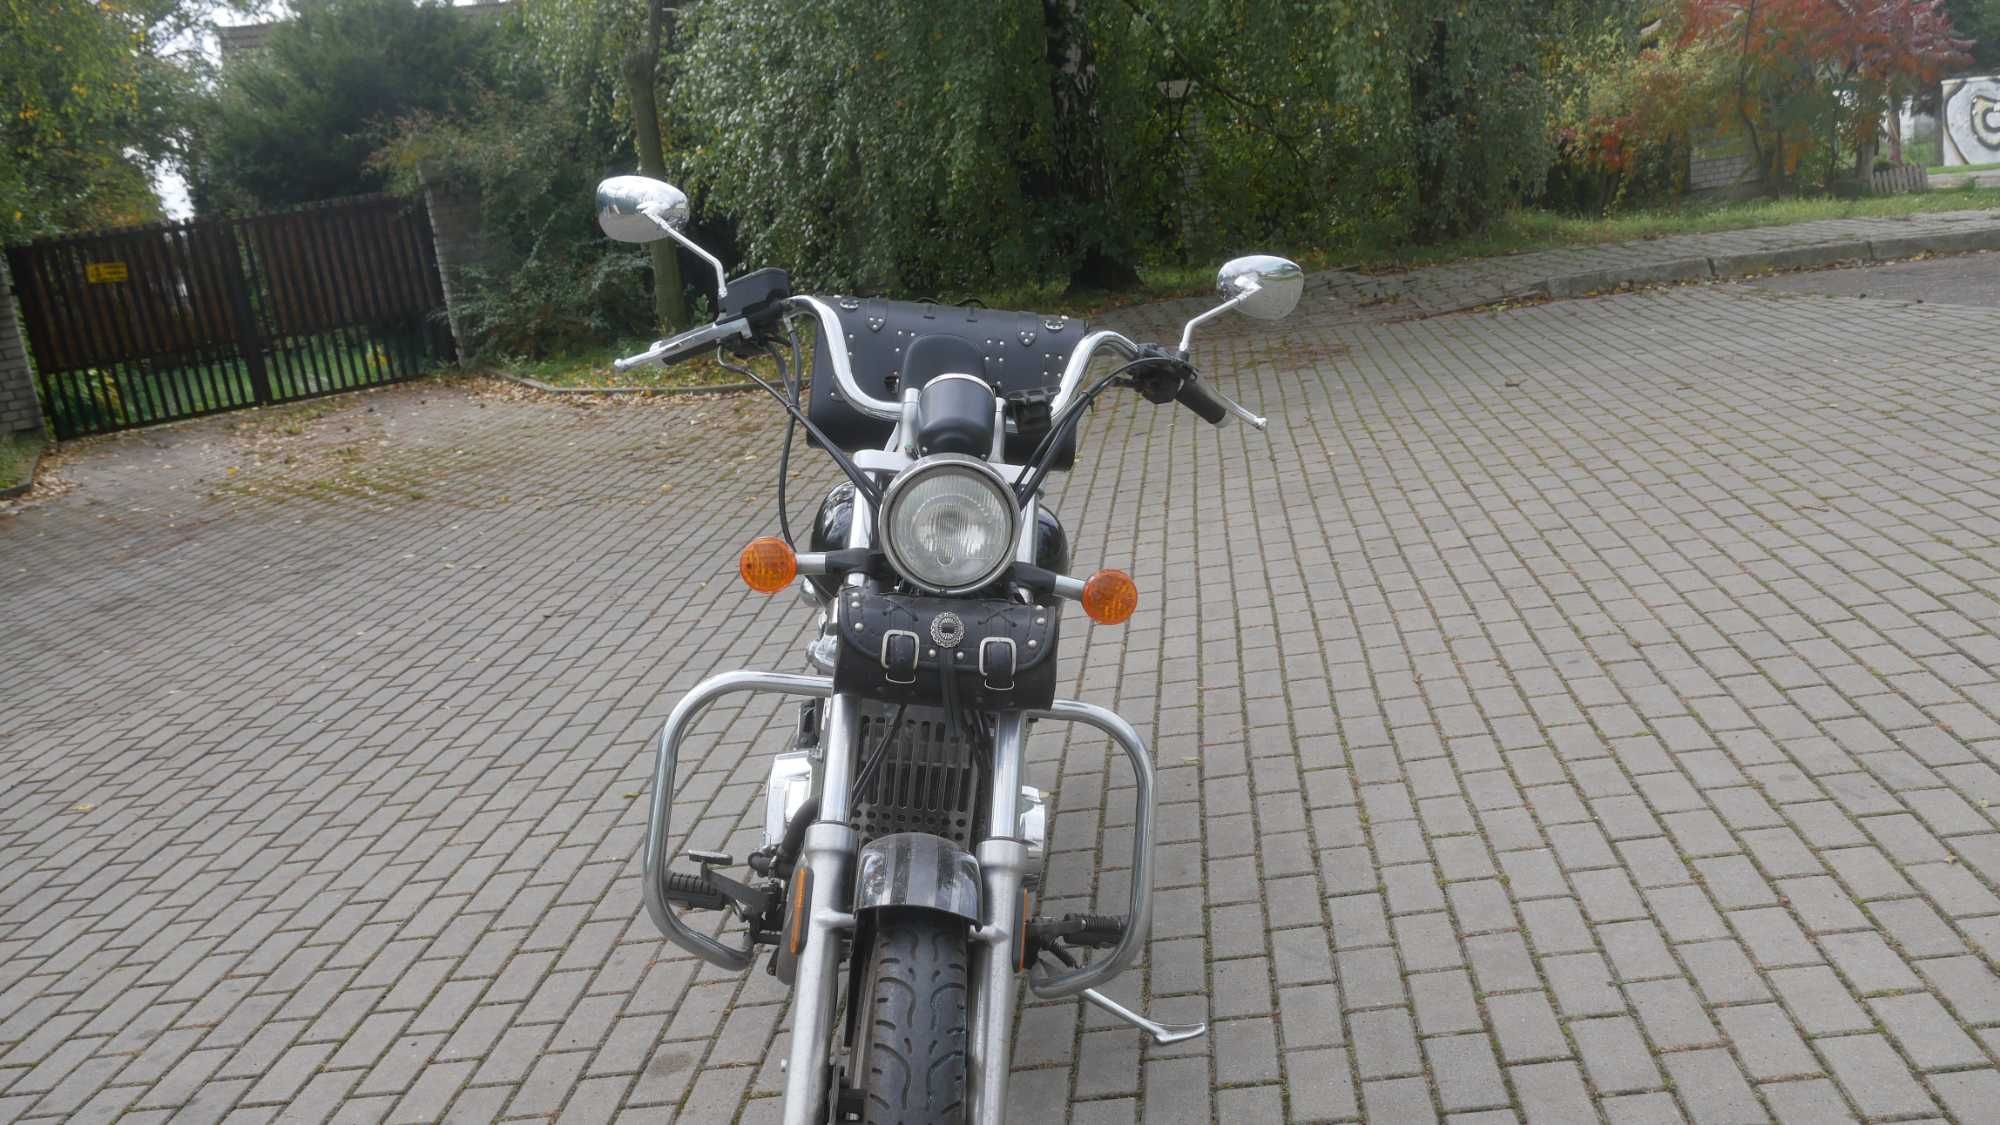 Junak M11 125 ccm Motocykl kategoria B